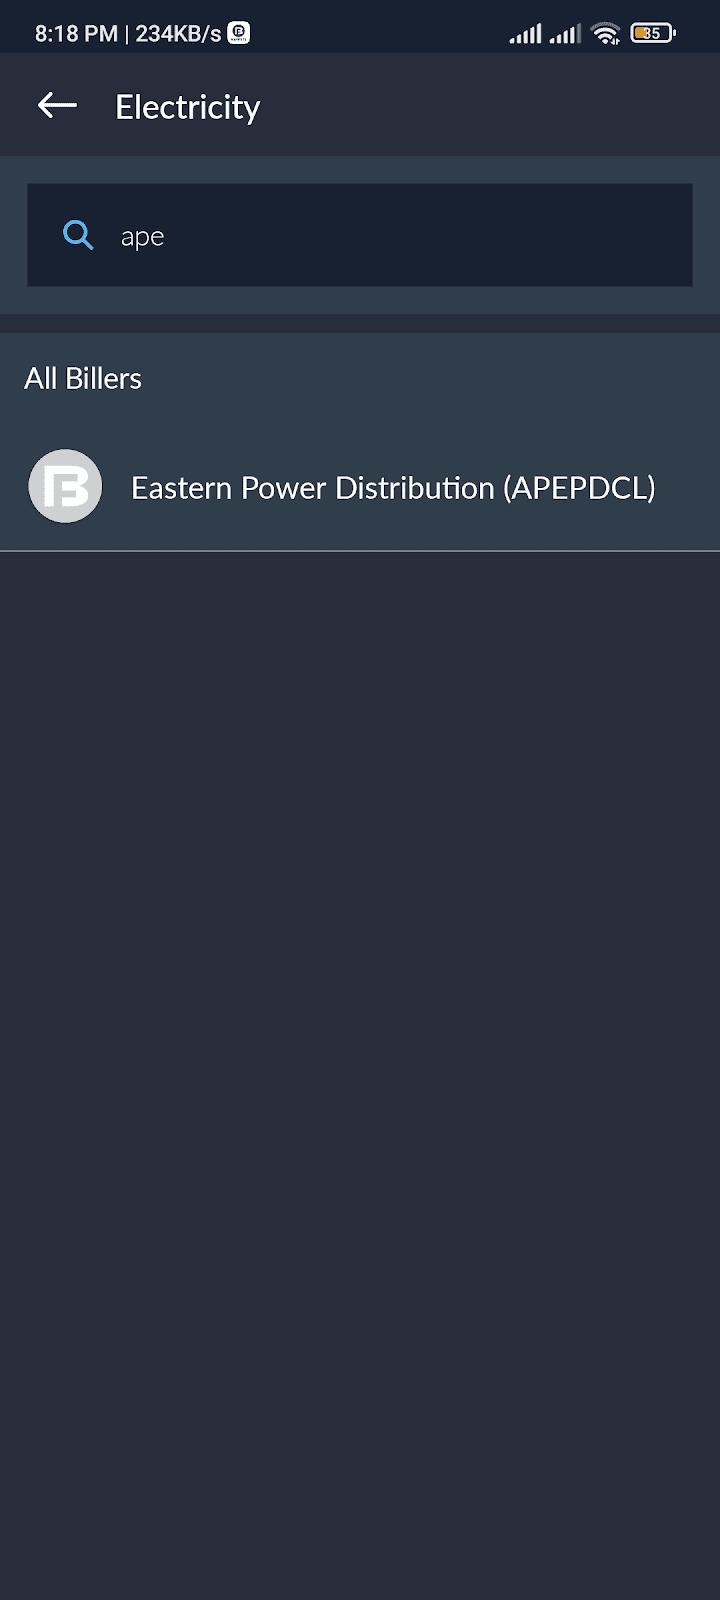 Eastern Power Distribution